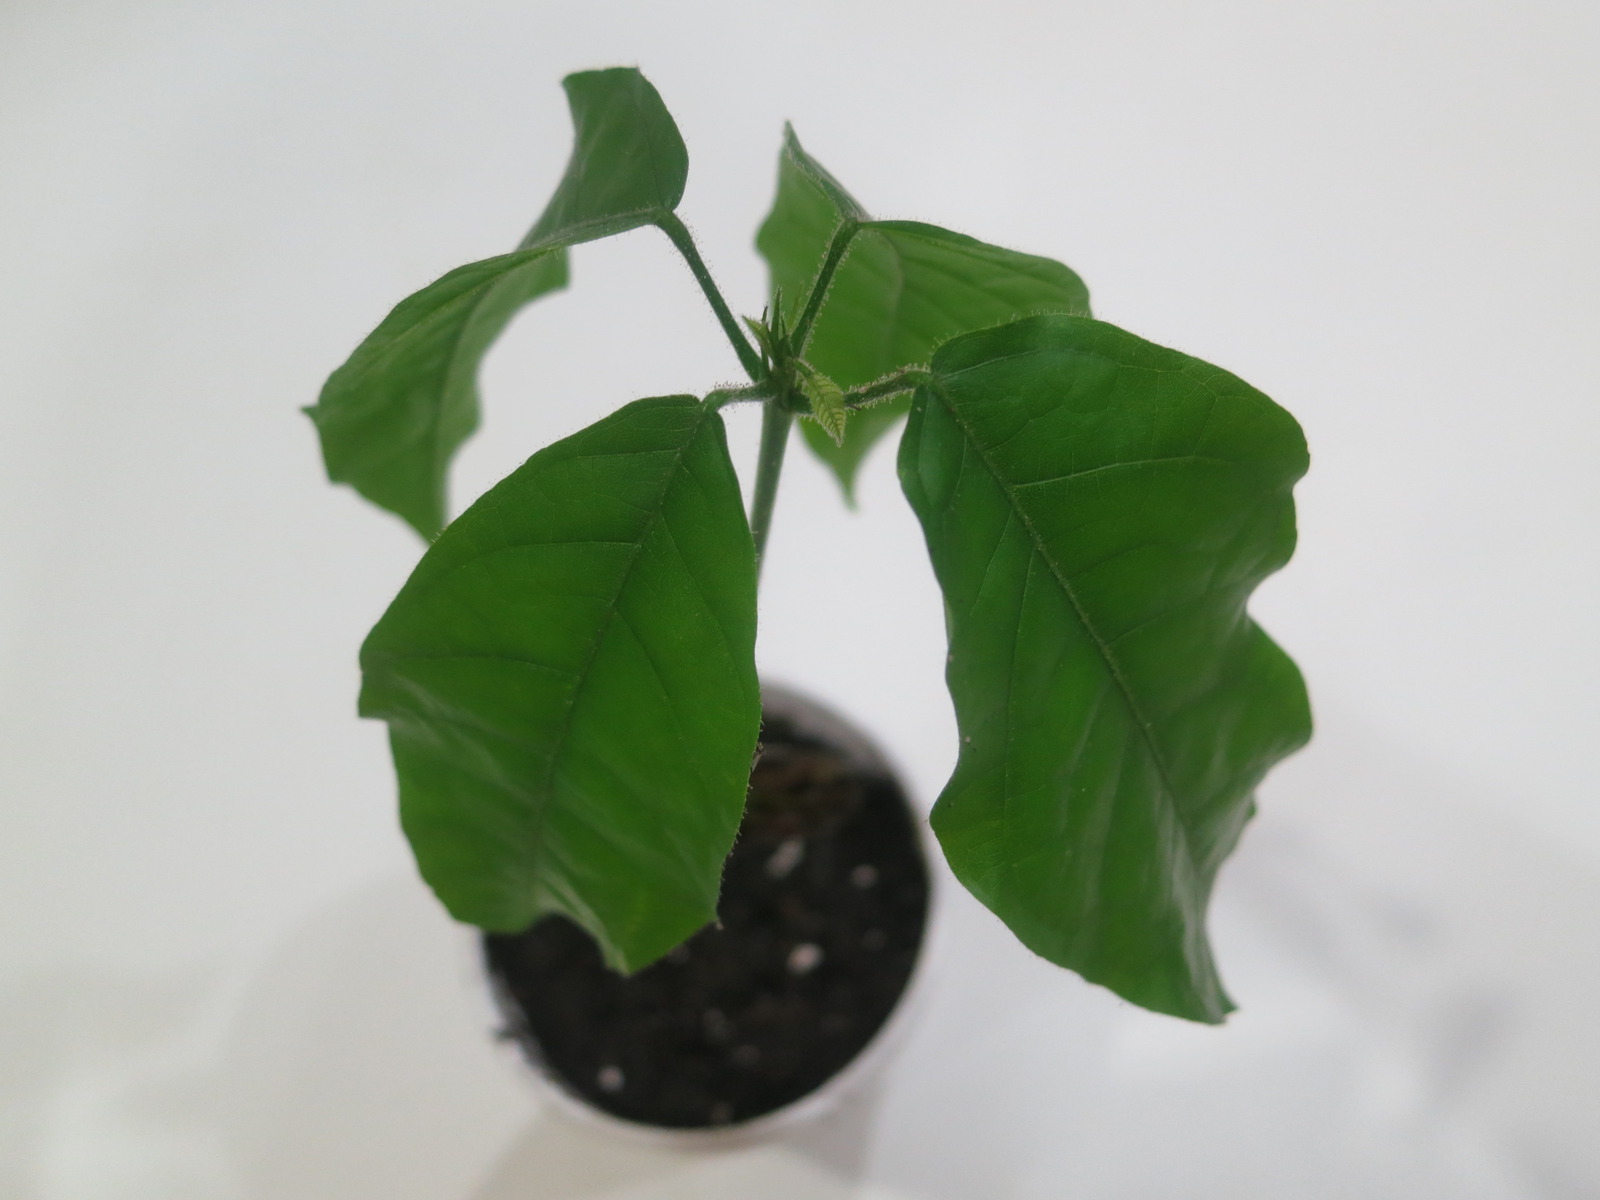 Theobroma Cacao "Trinitario" (Large Round Fruit) - Live Plant